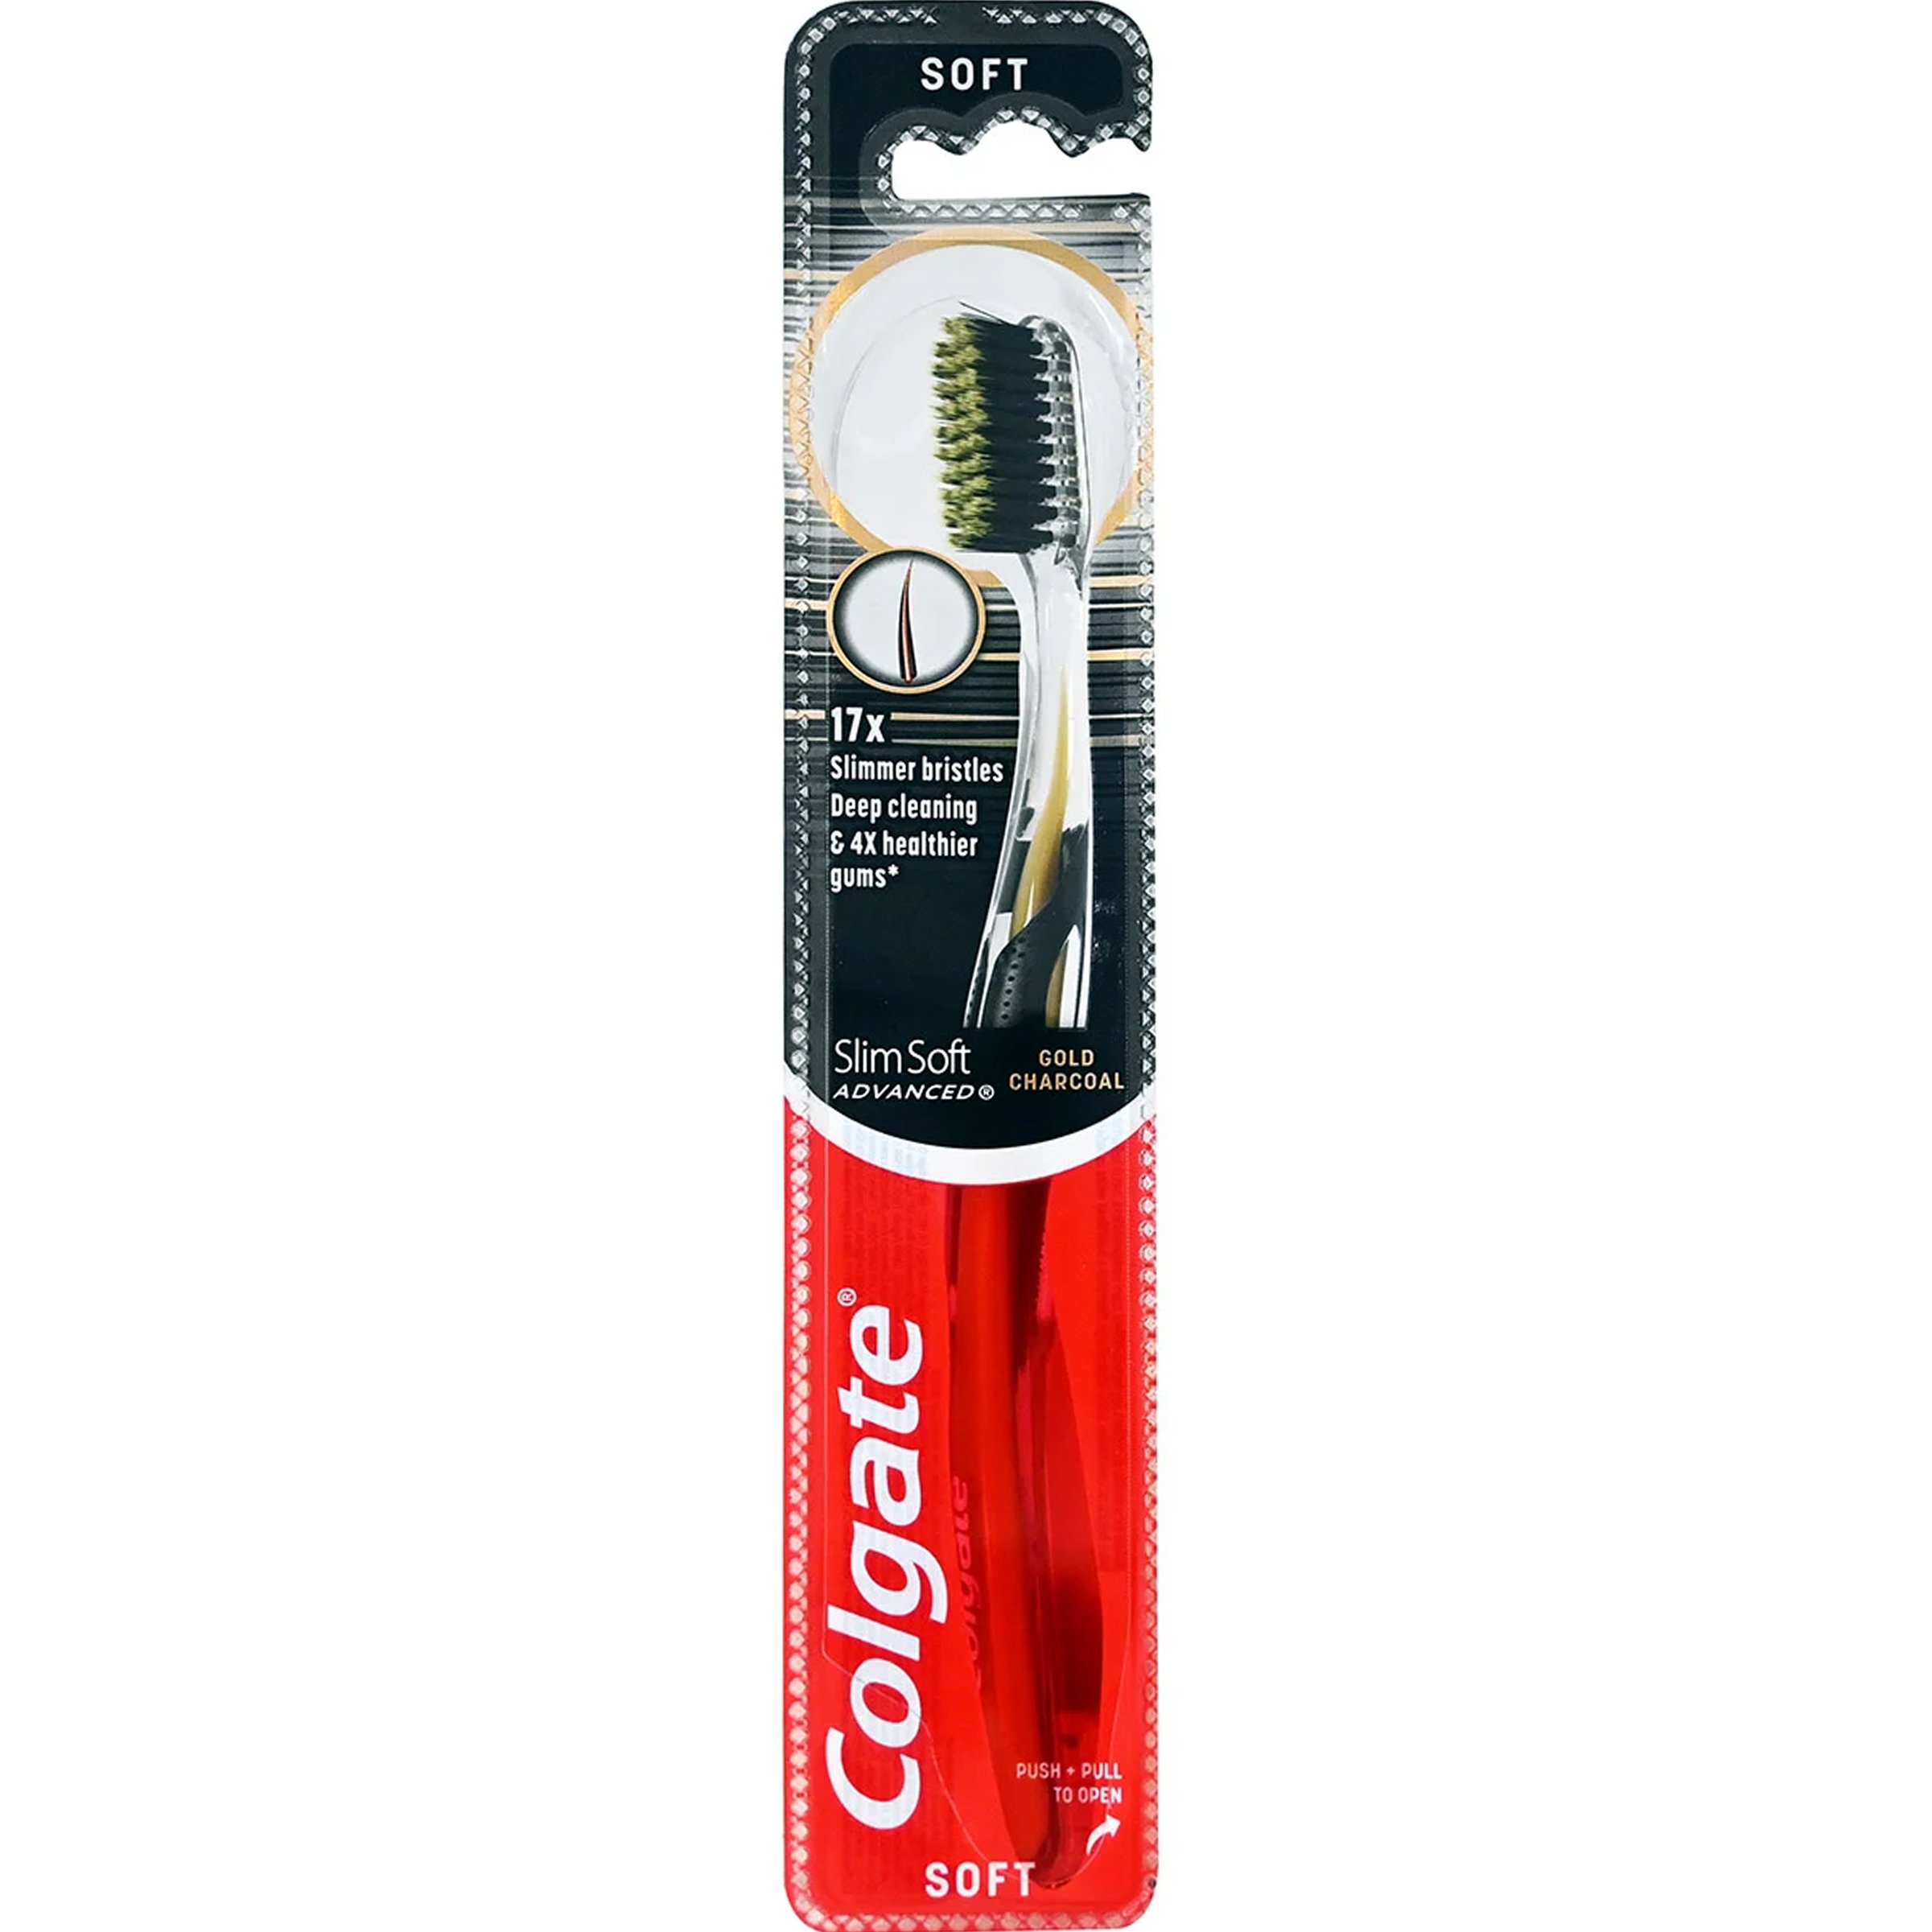 Colgate Slim Soft Advanced Gold Charcoal Toothbrush Οδοντόβουρτσα με Μαλακές Ίνες & Εργονομική Λαβή 1 Τεμάχιο – Μαύρο